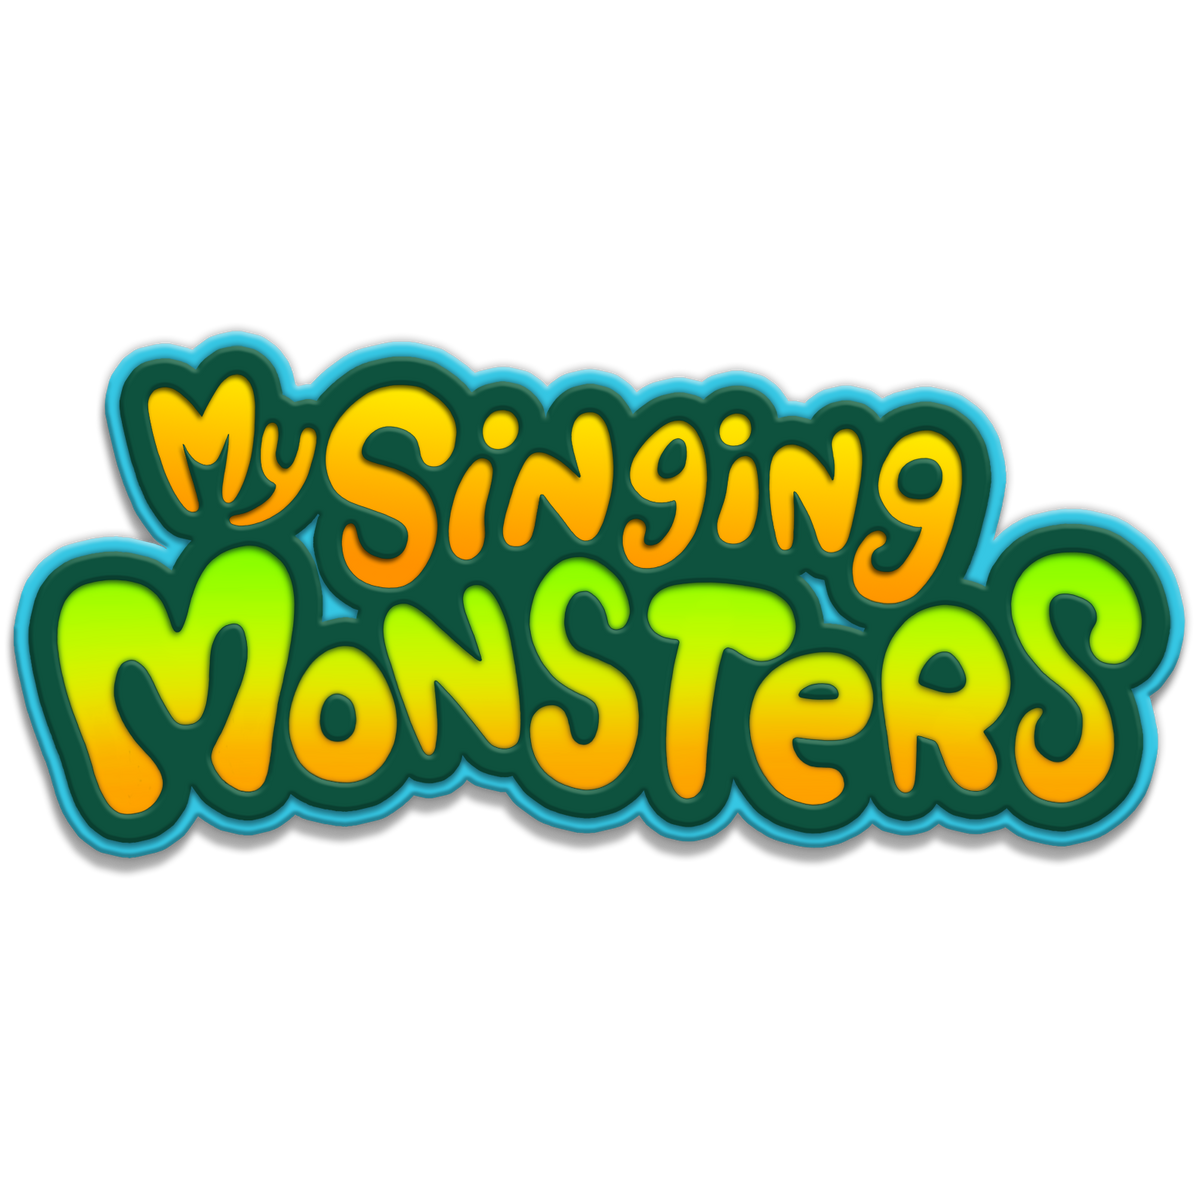 Save 44% on My Singing Monsters - Handler-Helper Edition on Steam